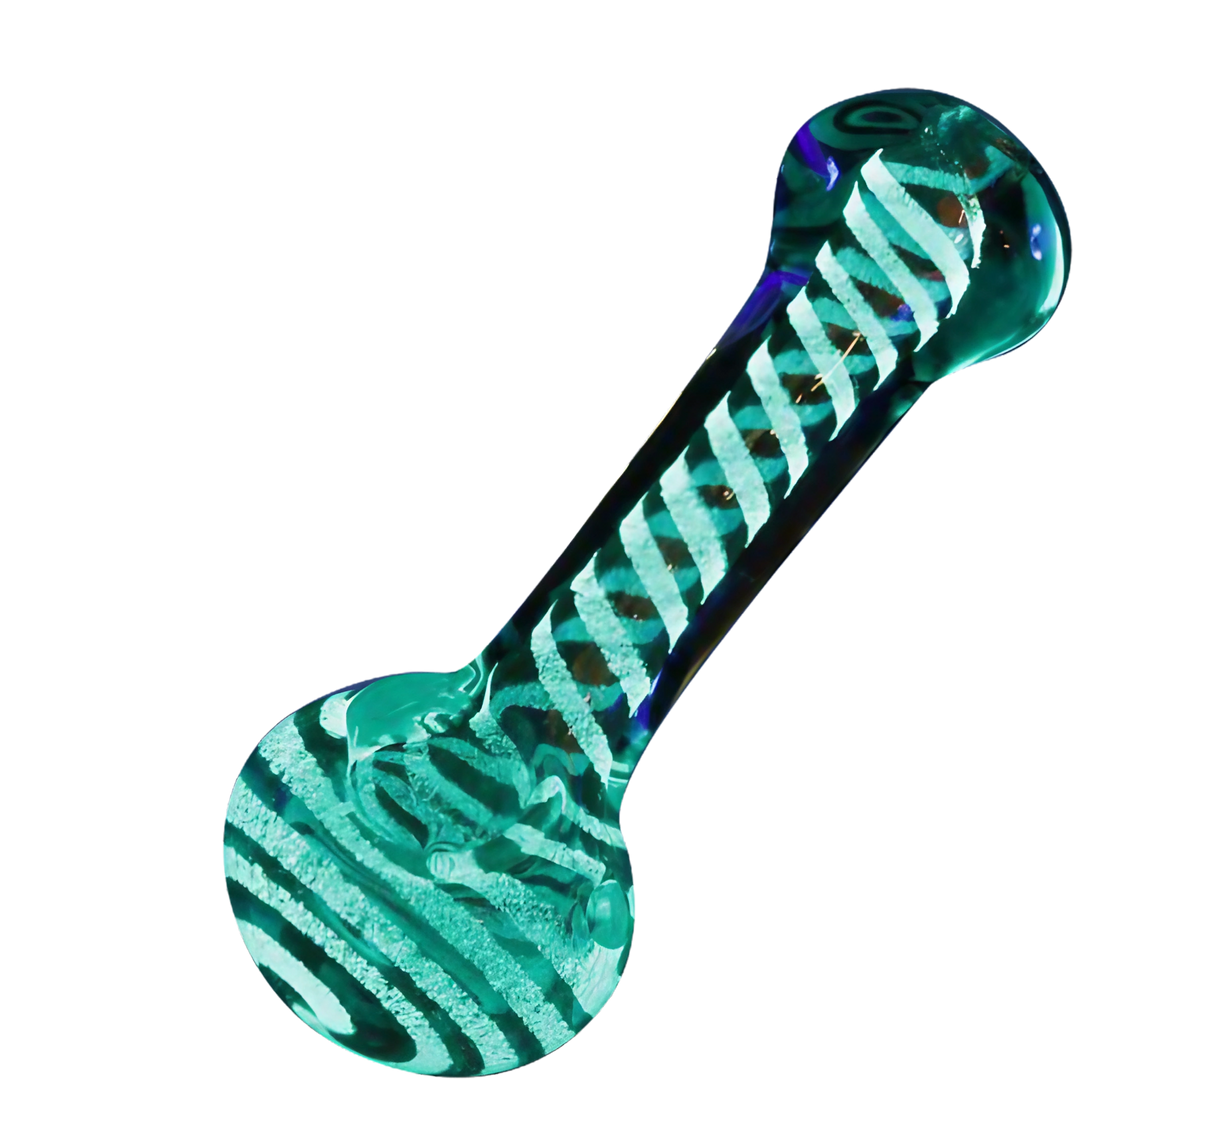 Glow in the Dark Swirl Hand Pipe, UV Reactive Borosilicate Glass, Angled Side View